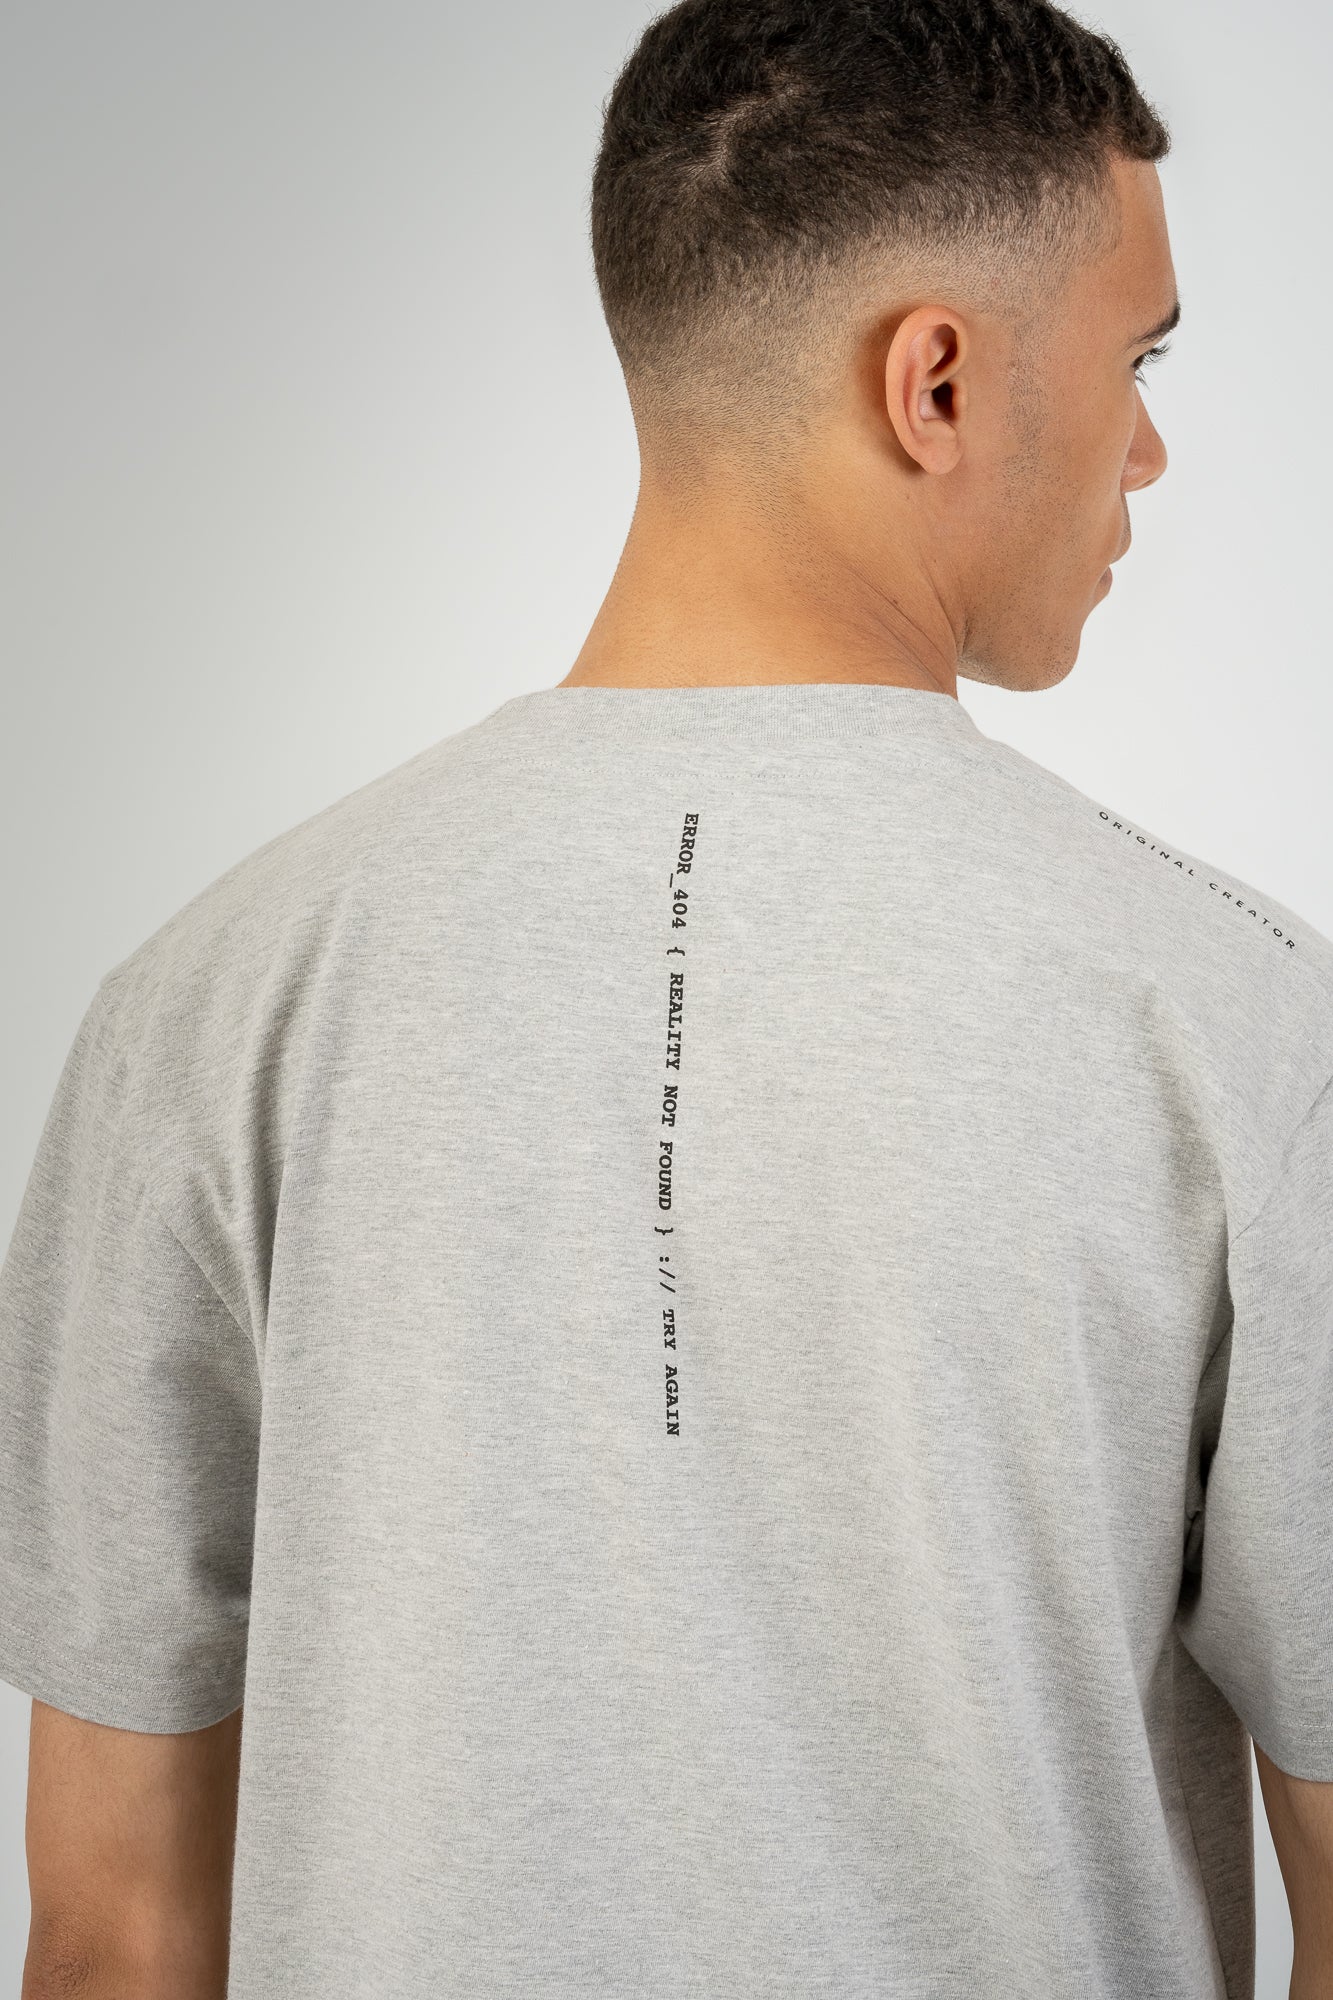 HTML Zip T-Shirt - Granite Grey